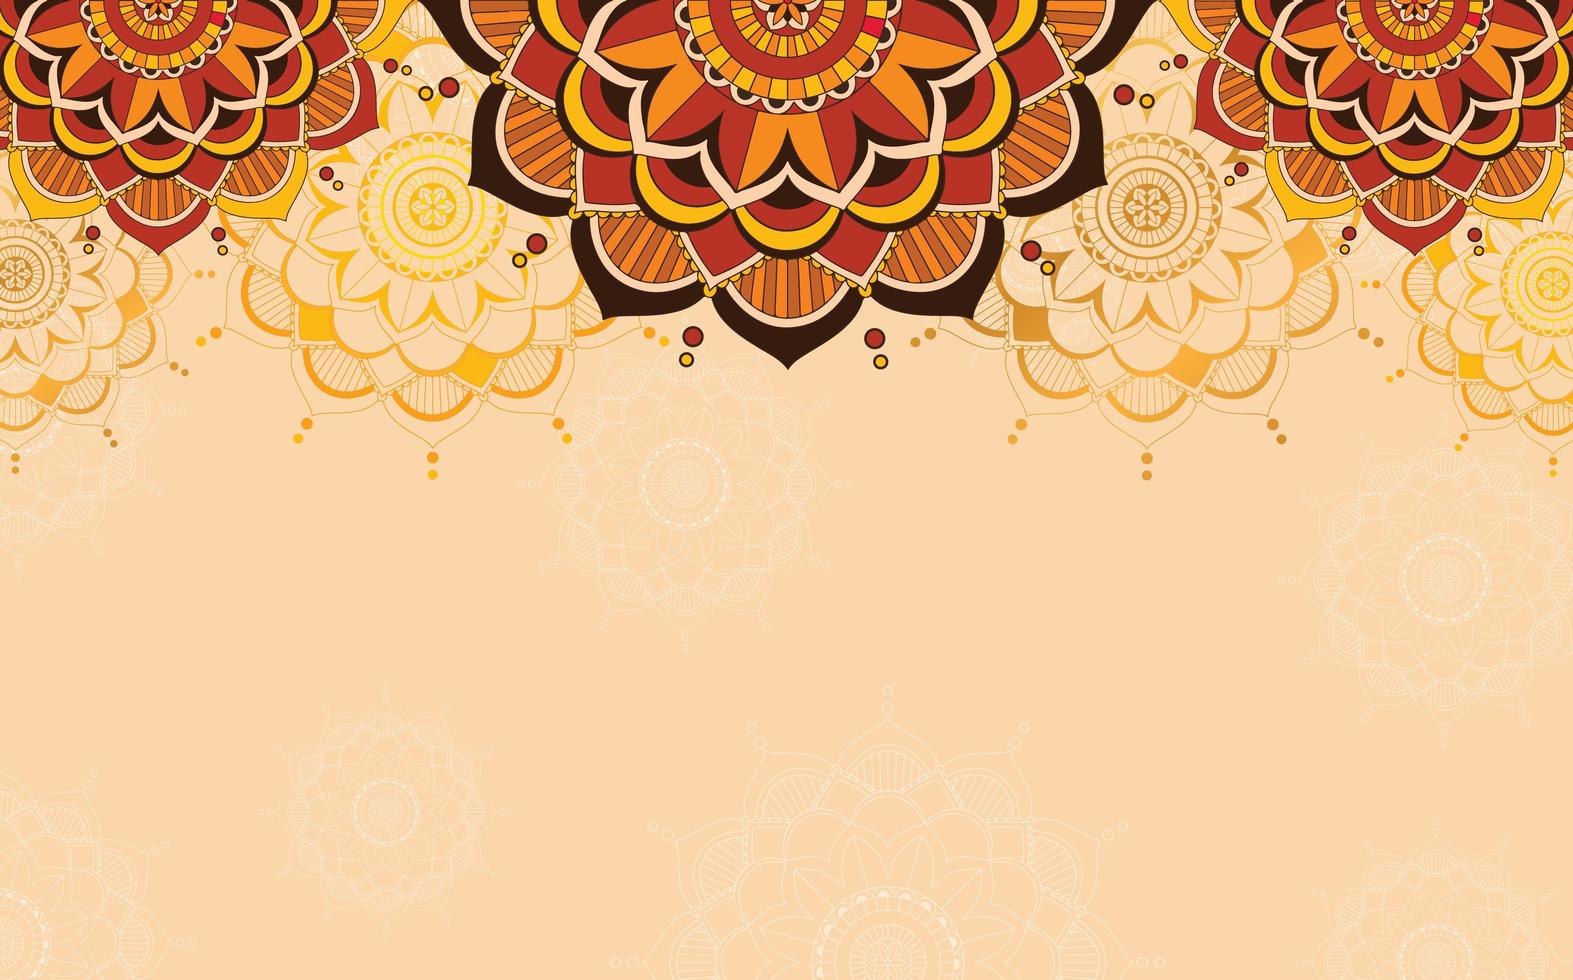 Hintergrunddesign mit Mandalas in brauner Farbe vektor